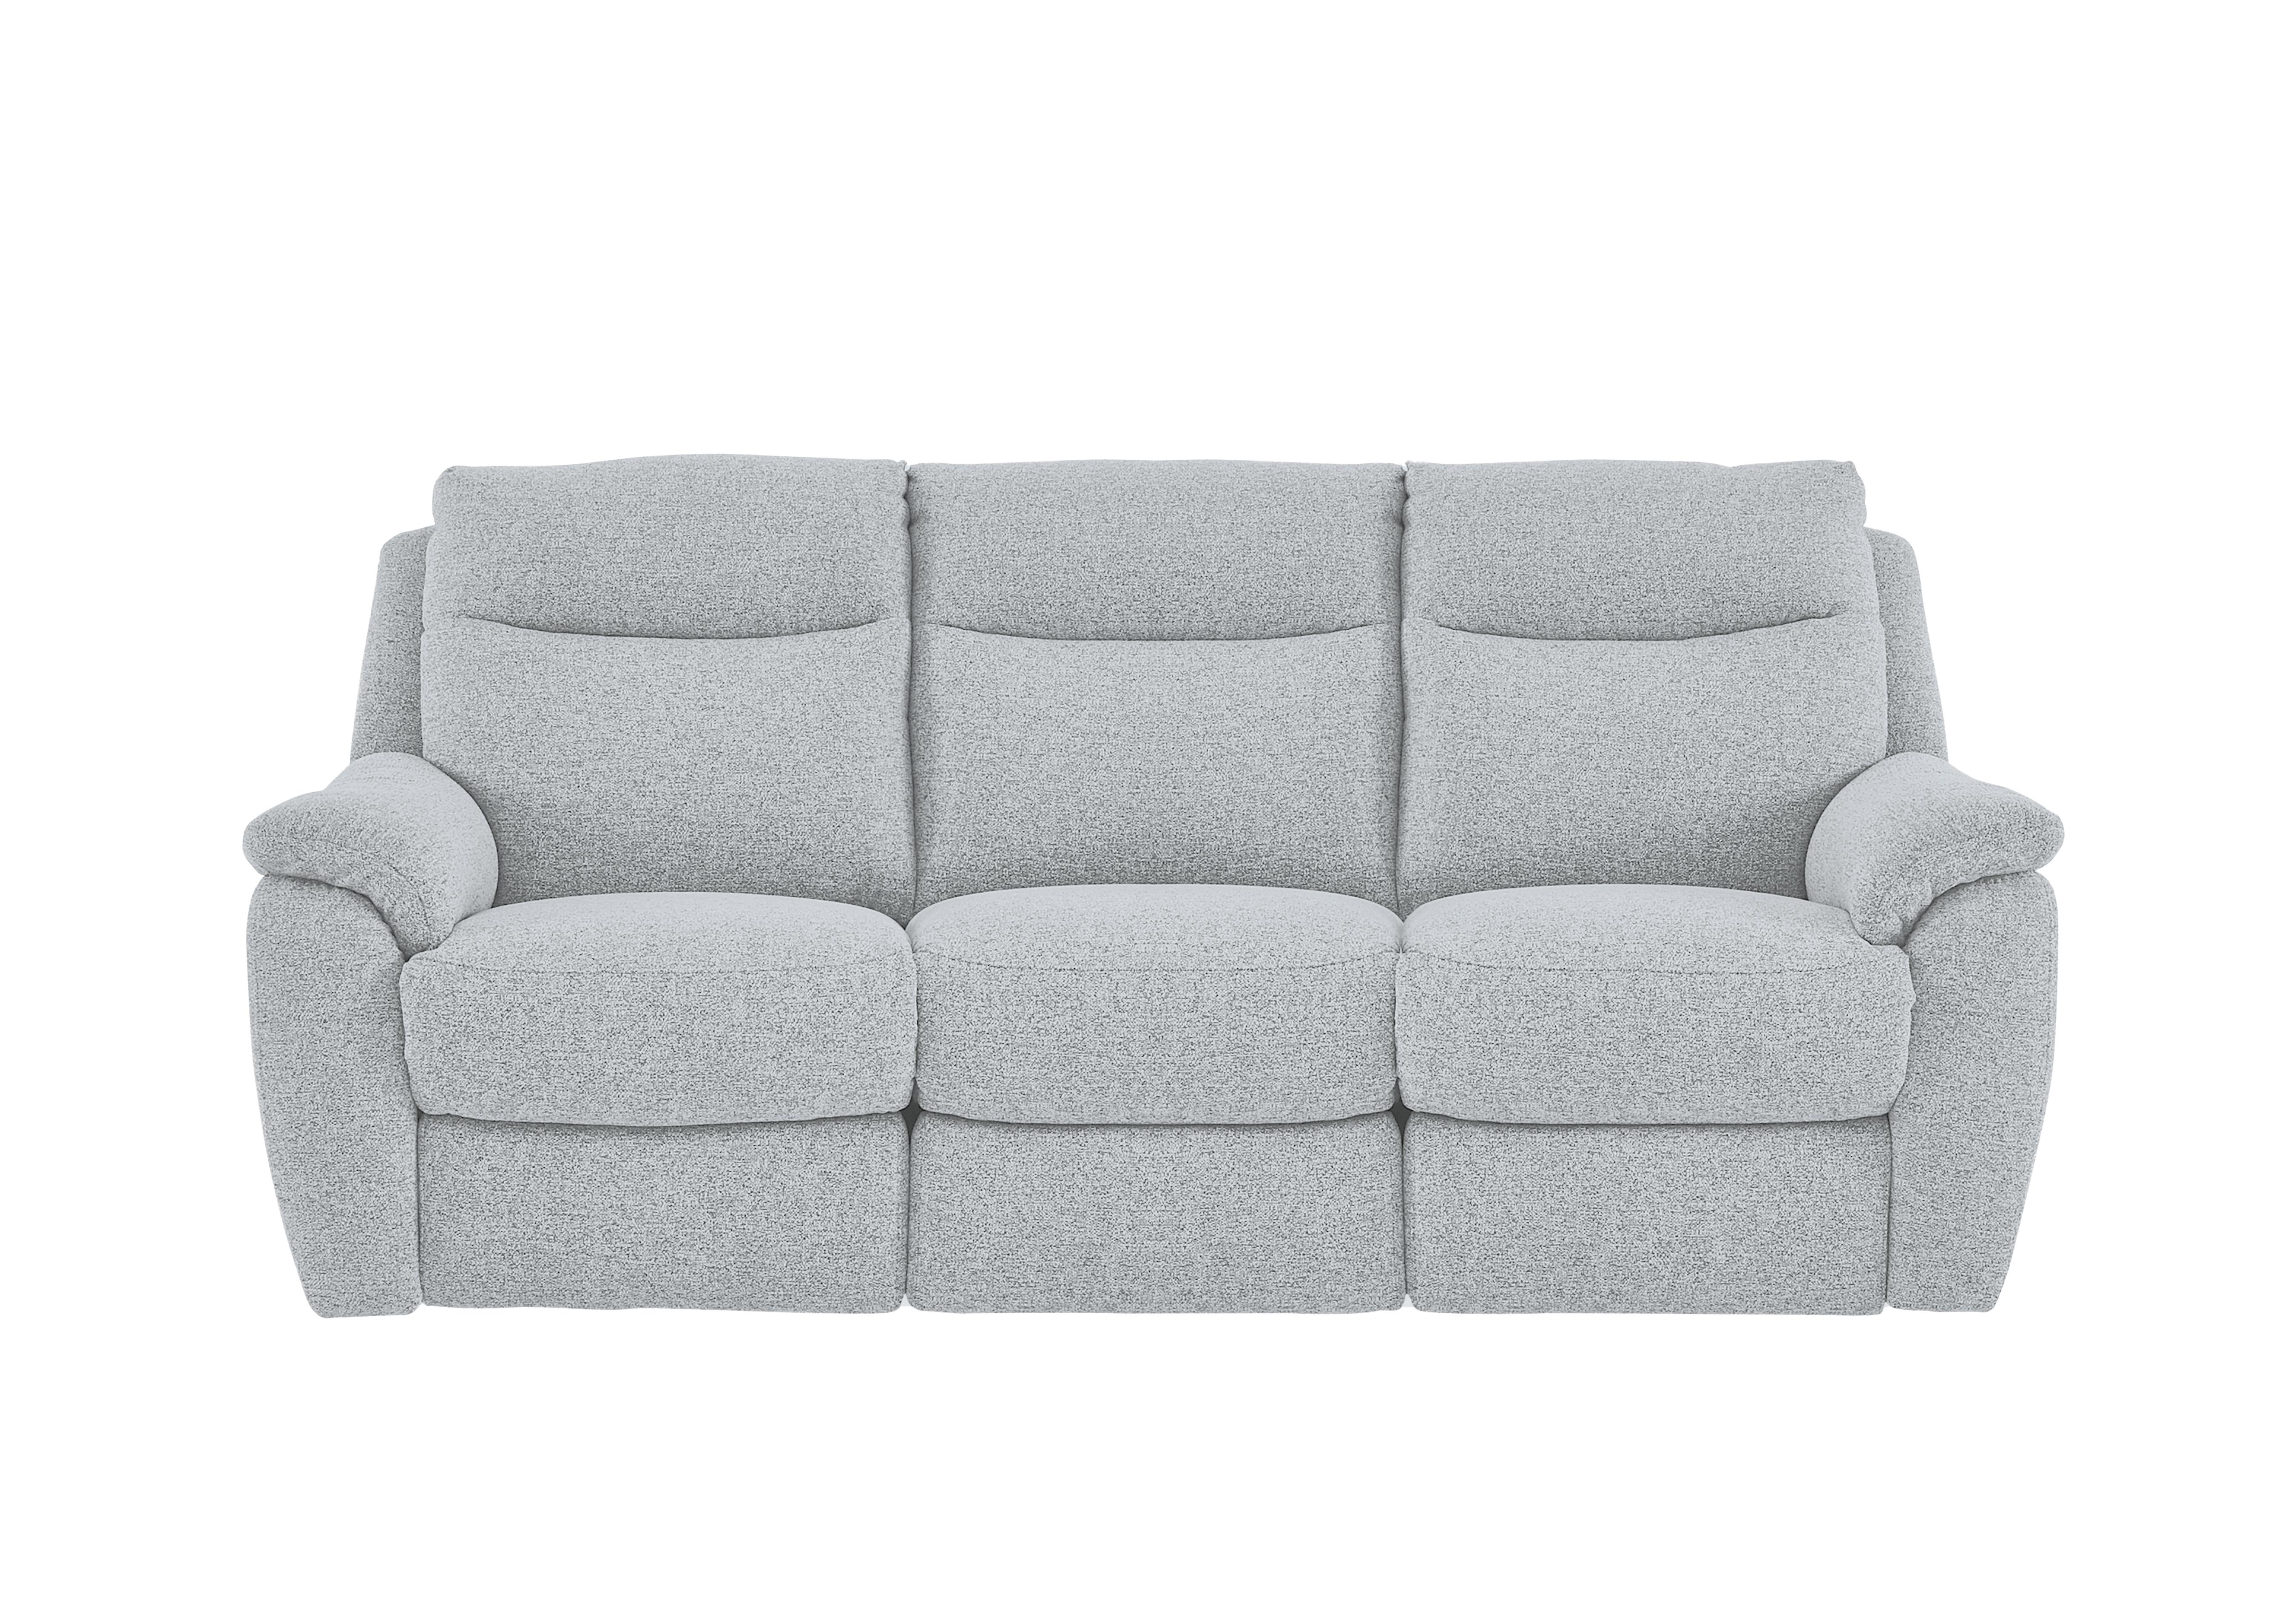 Snug 3 Seater Fabric Sofa in Fab-Chl-R21 Frost on Furniture Village